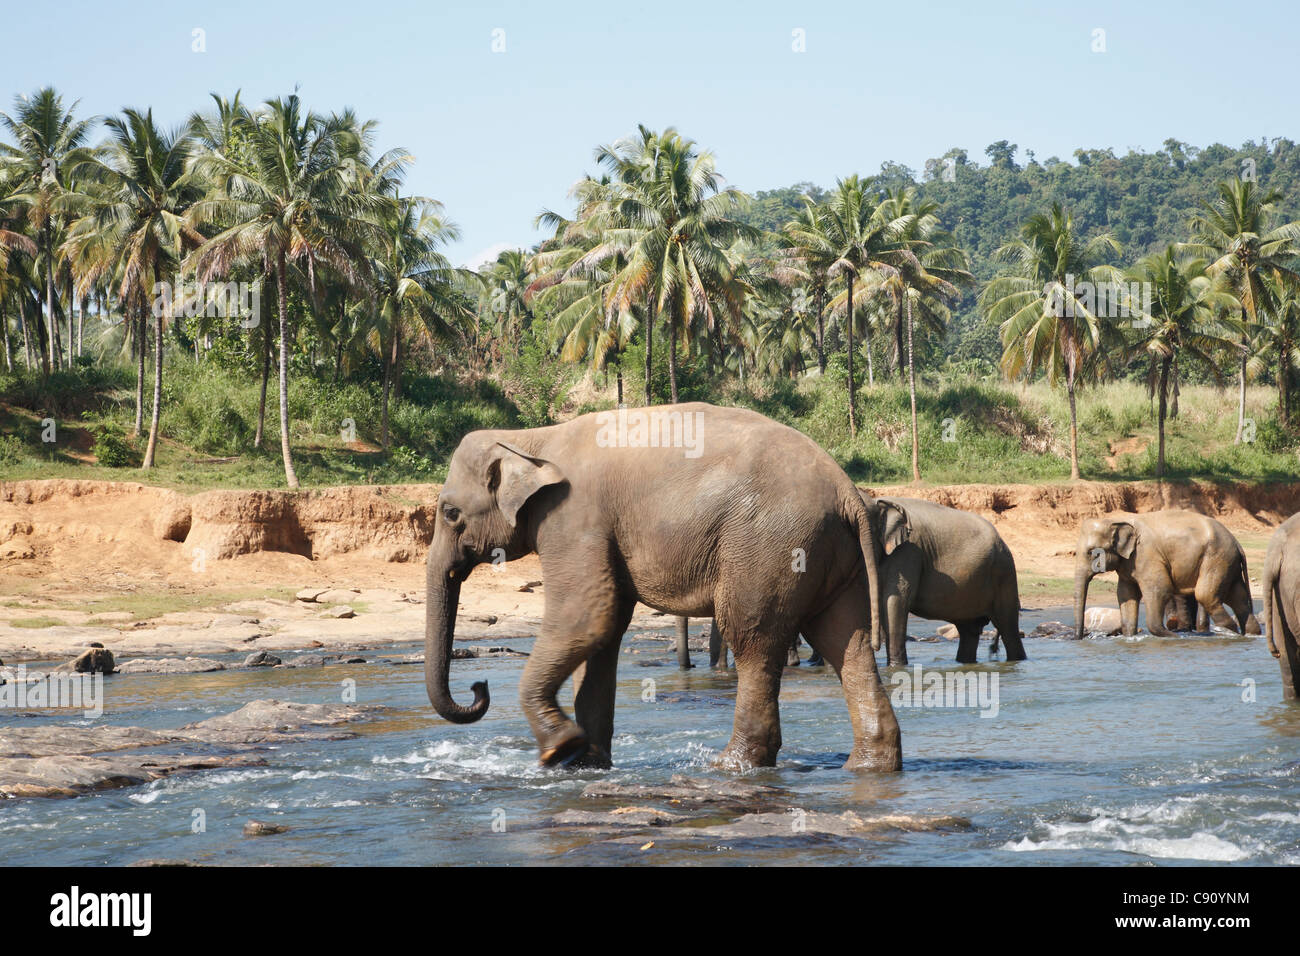 Sri Lanka is home to the worldâ€™s largest herd of captive elephants at the Pinnawala Elephant Orphanage. Here elephants that Stock Photo